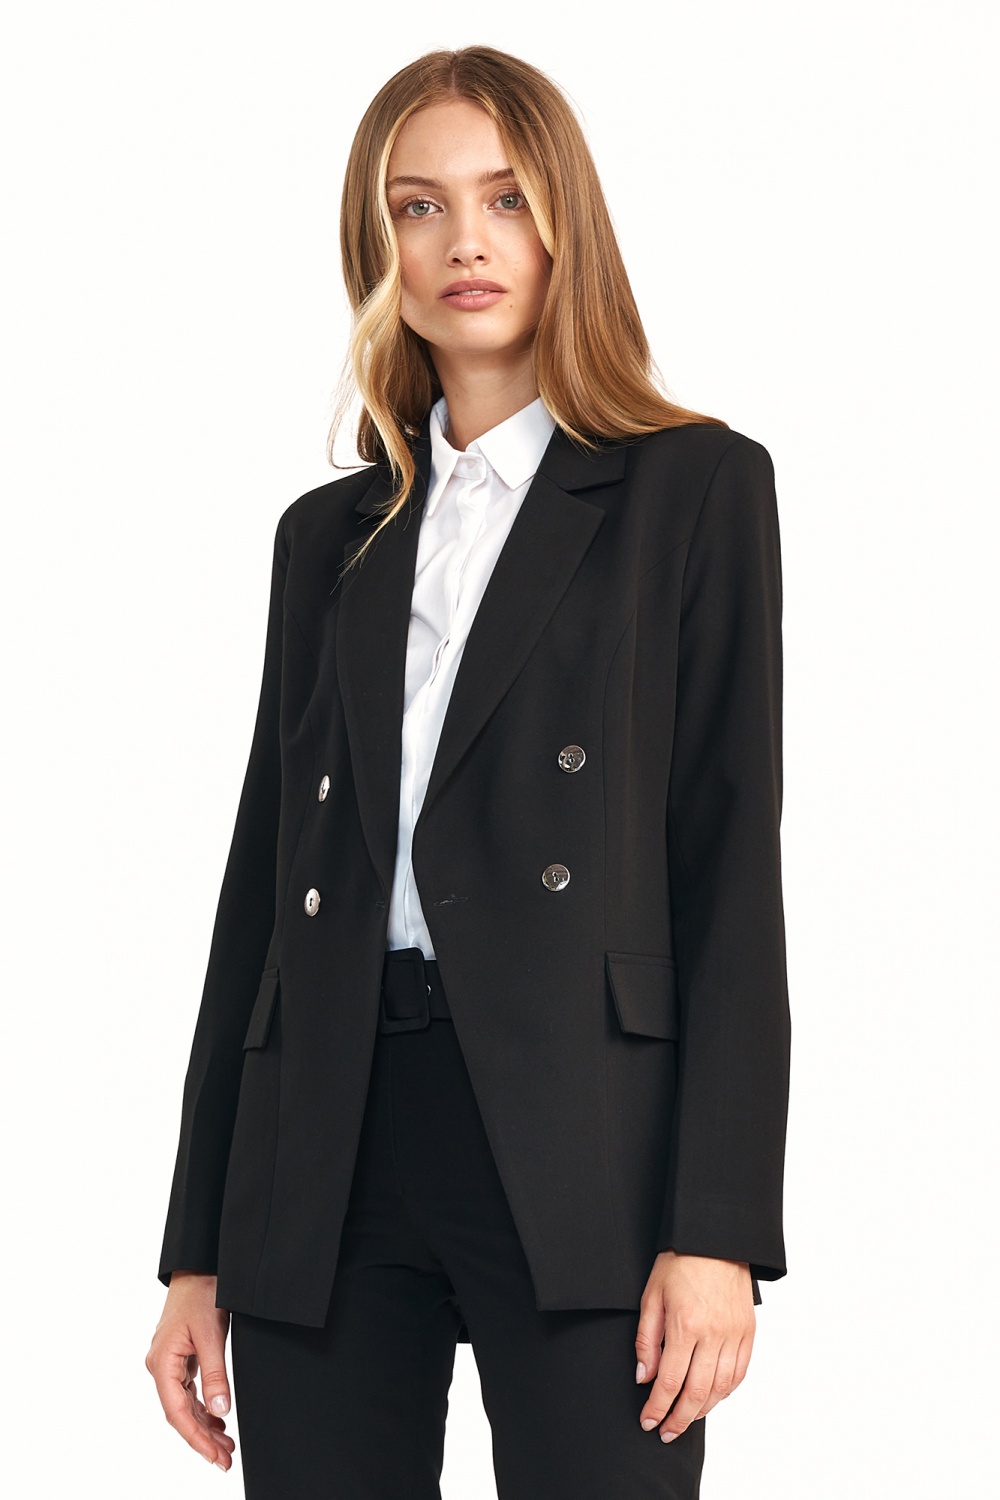  Jacket model 158668 Nife  black